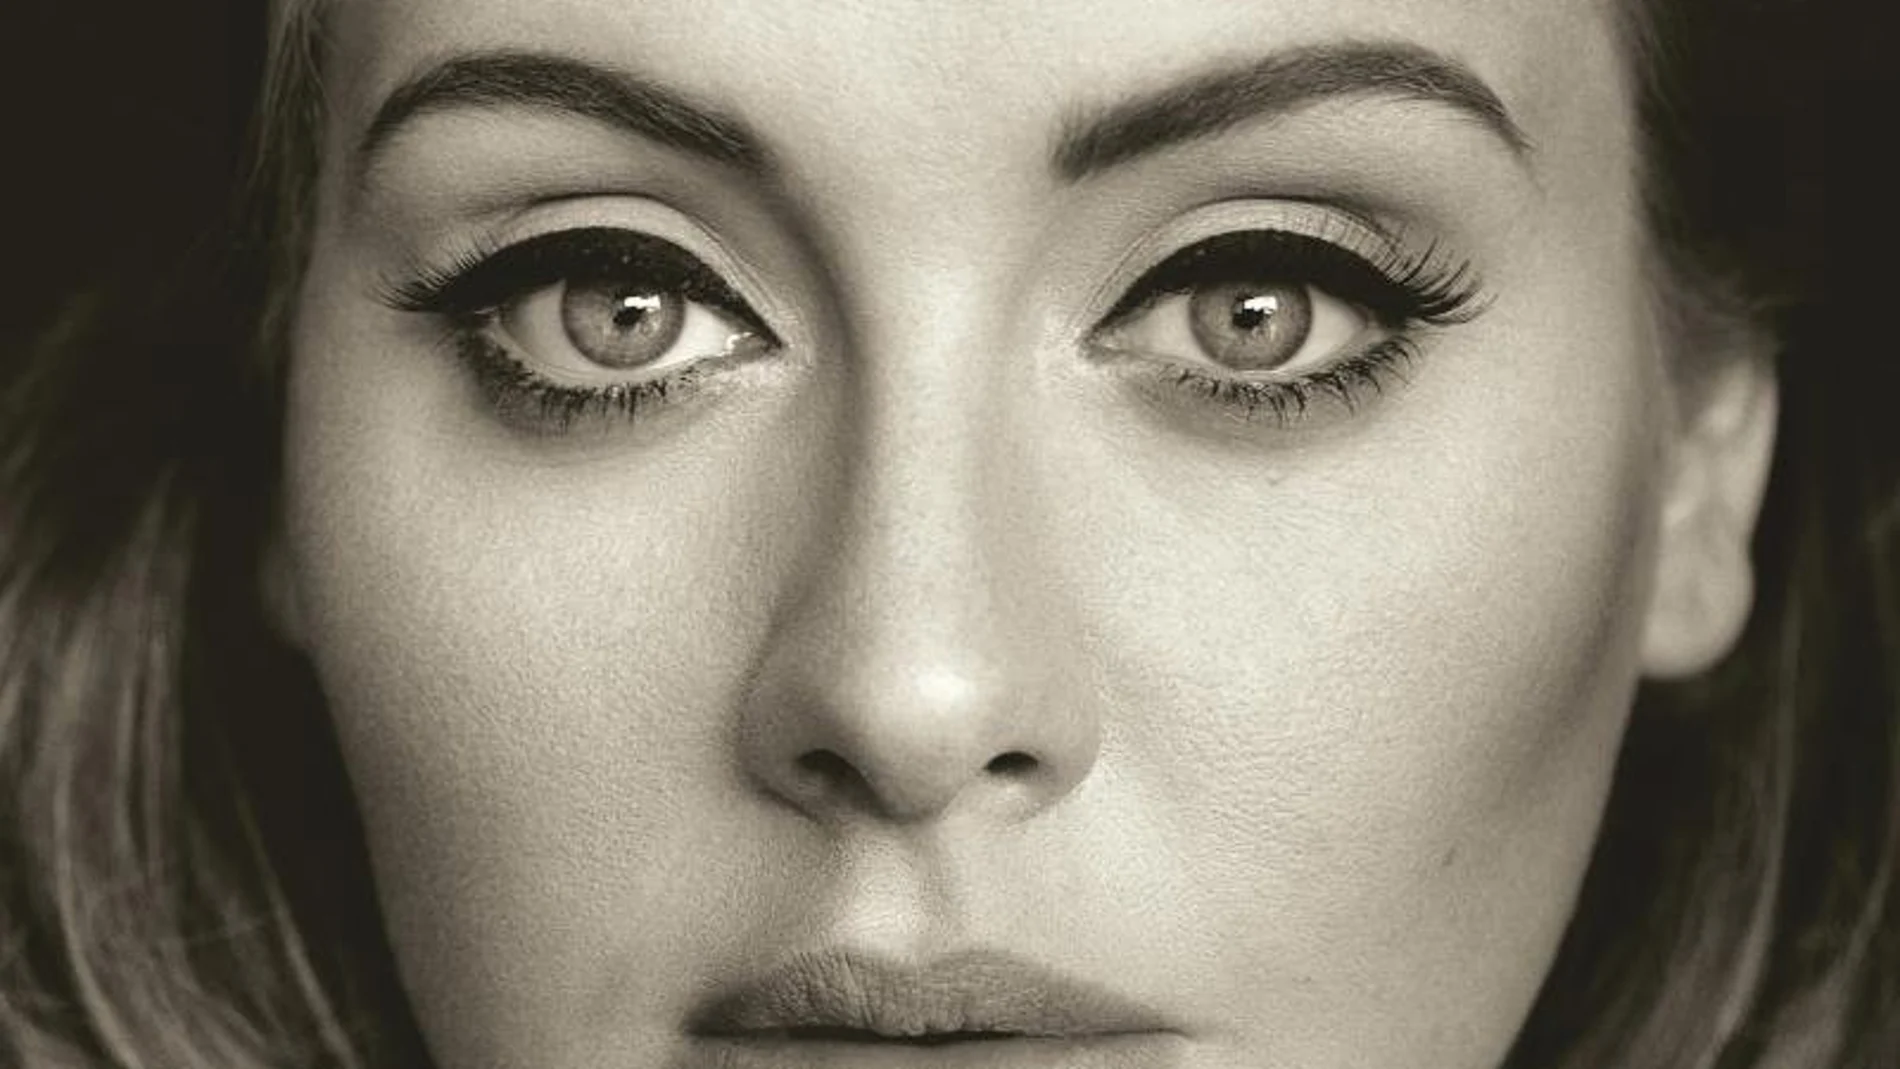 Carátula del CD de Adele "25"